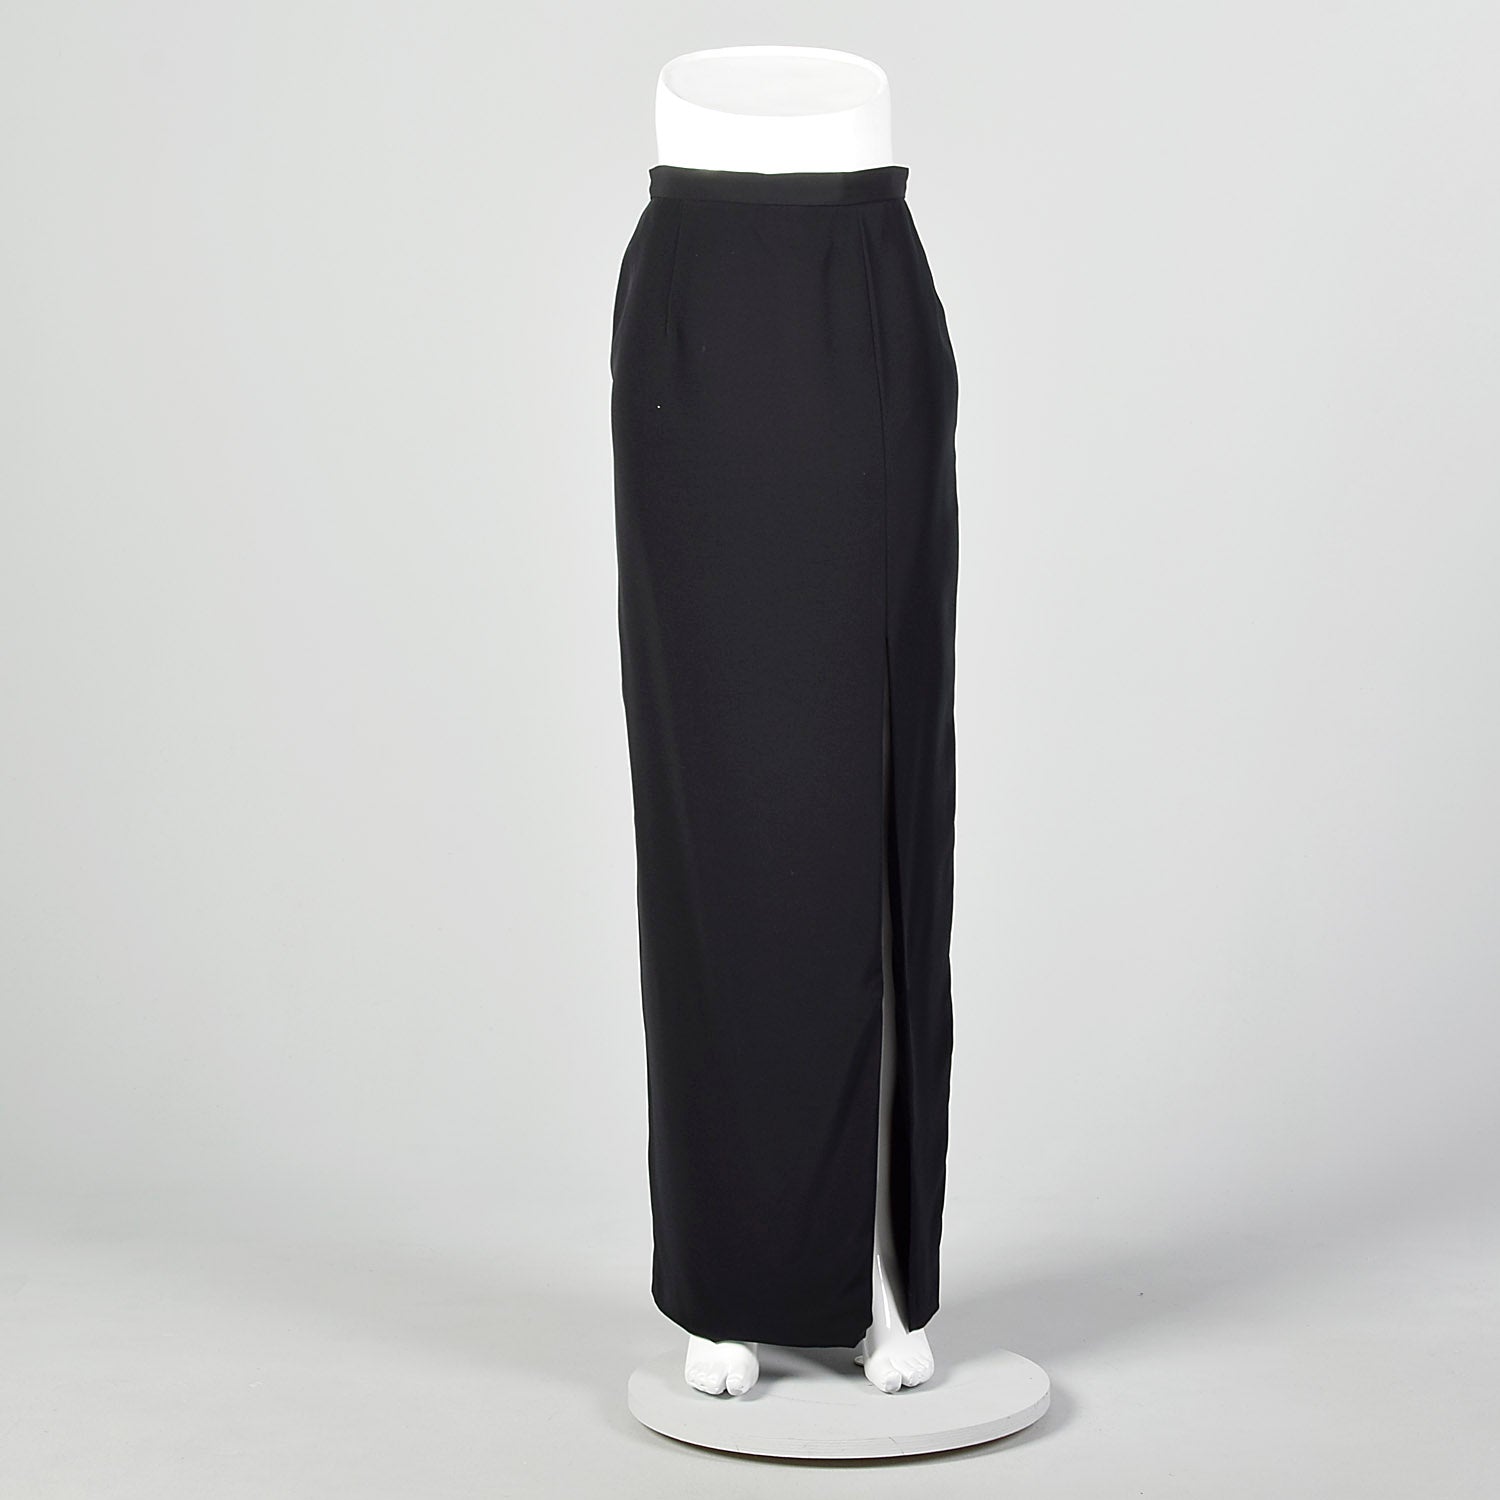 Oleg Cassini Black Tie Long Formal Pencil Skirt